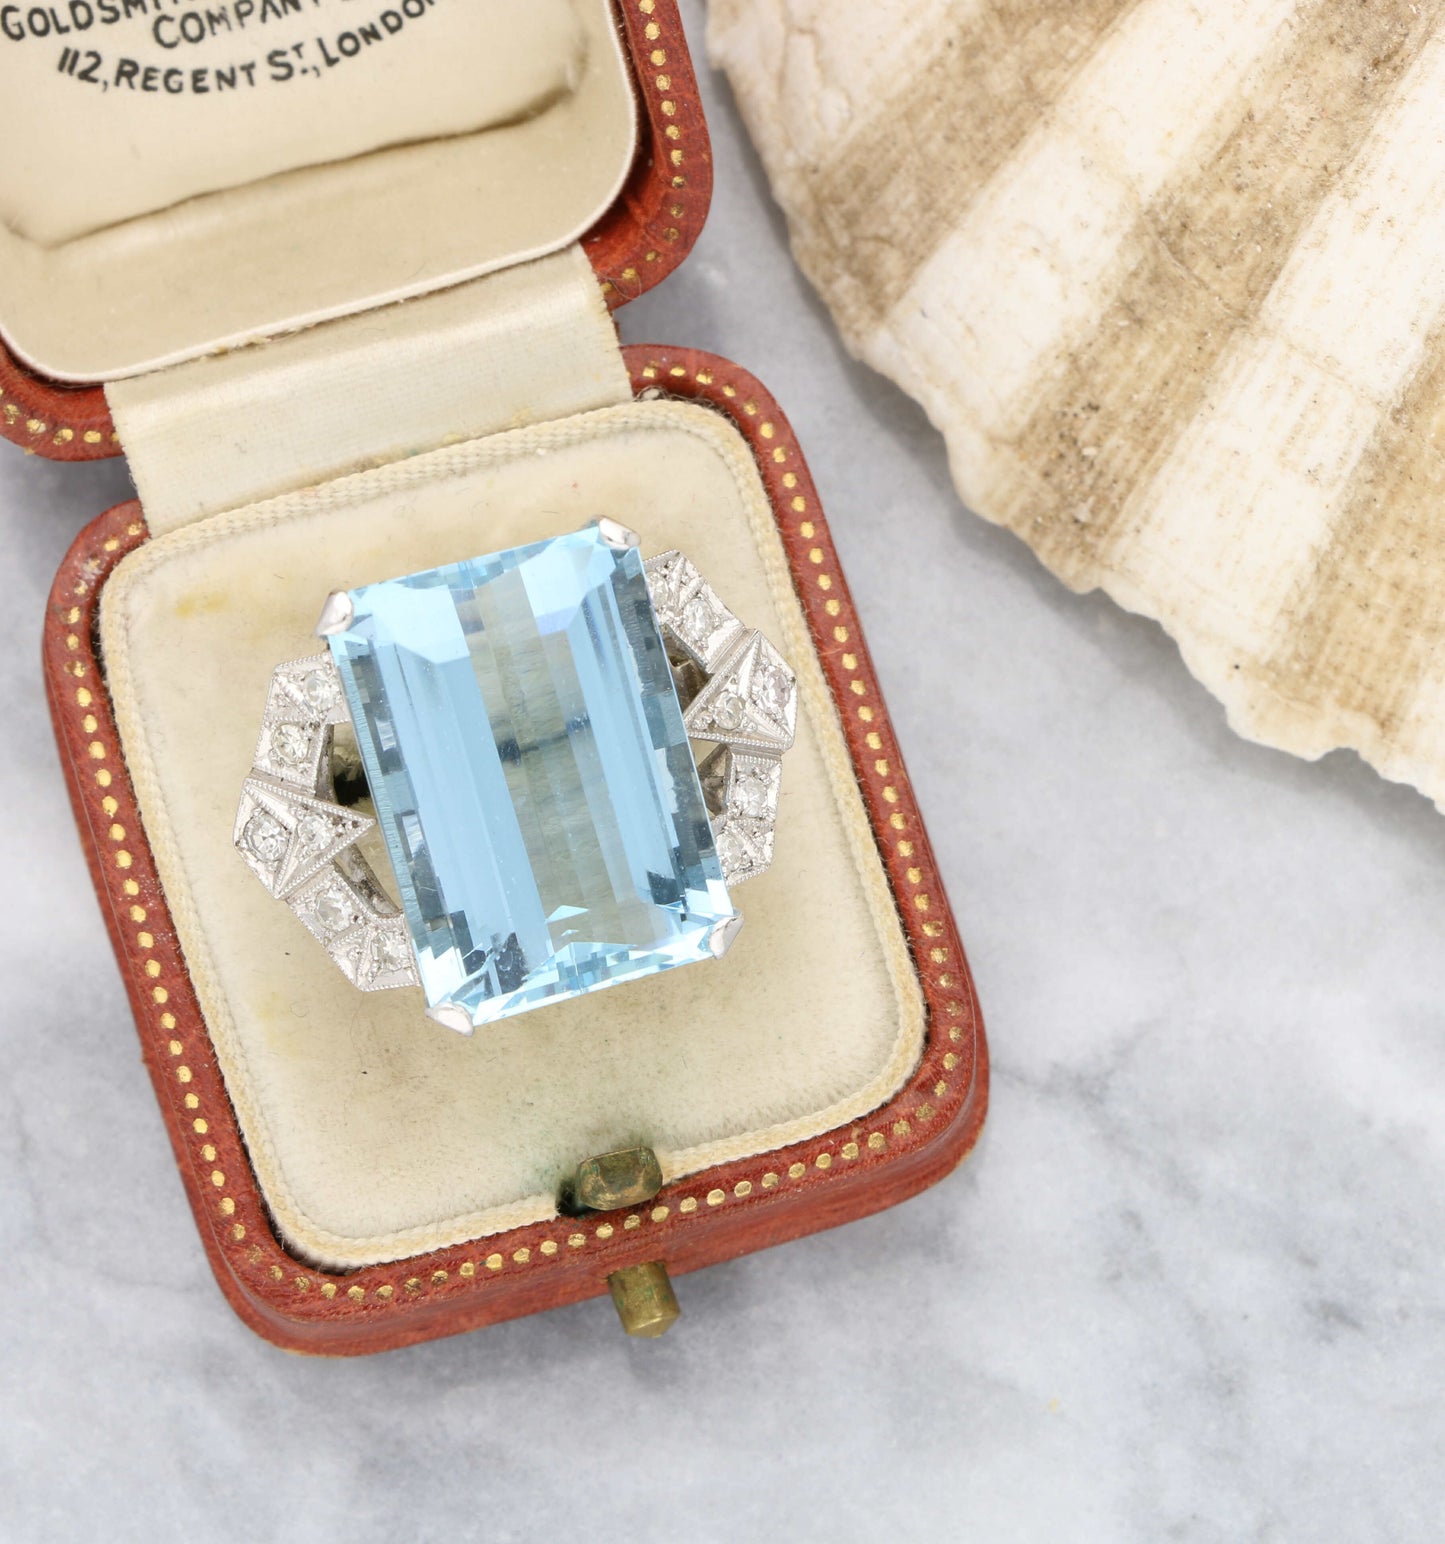 Art Deco style aquamarine and diamond ring